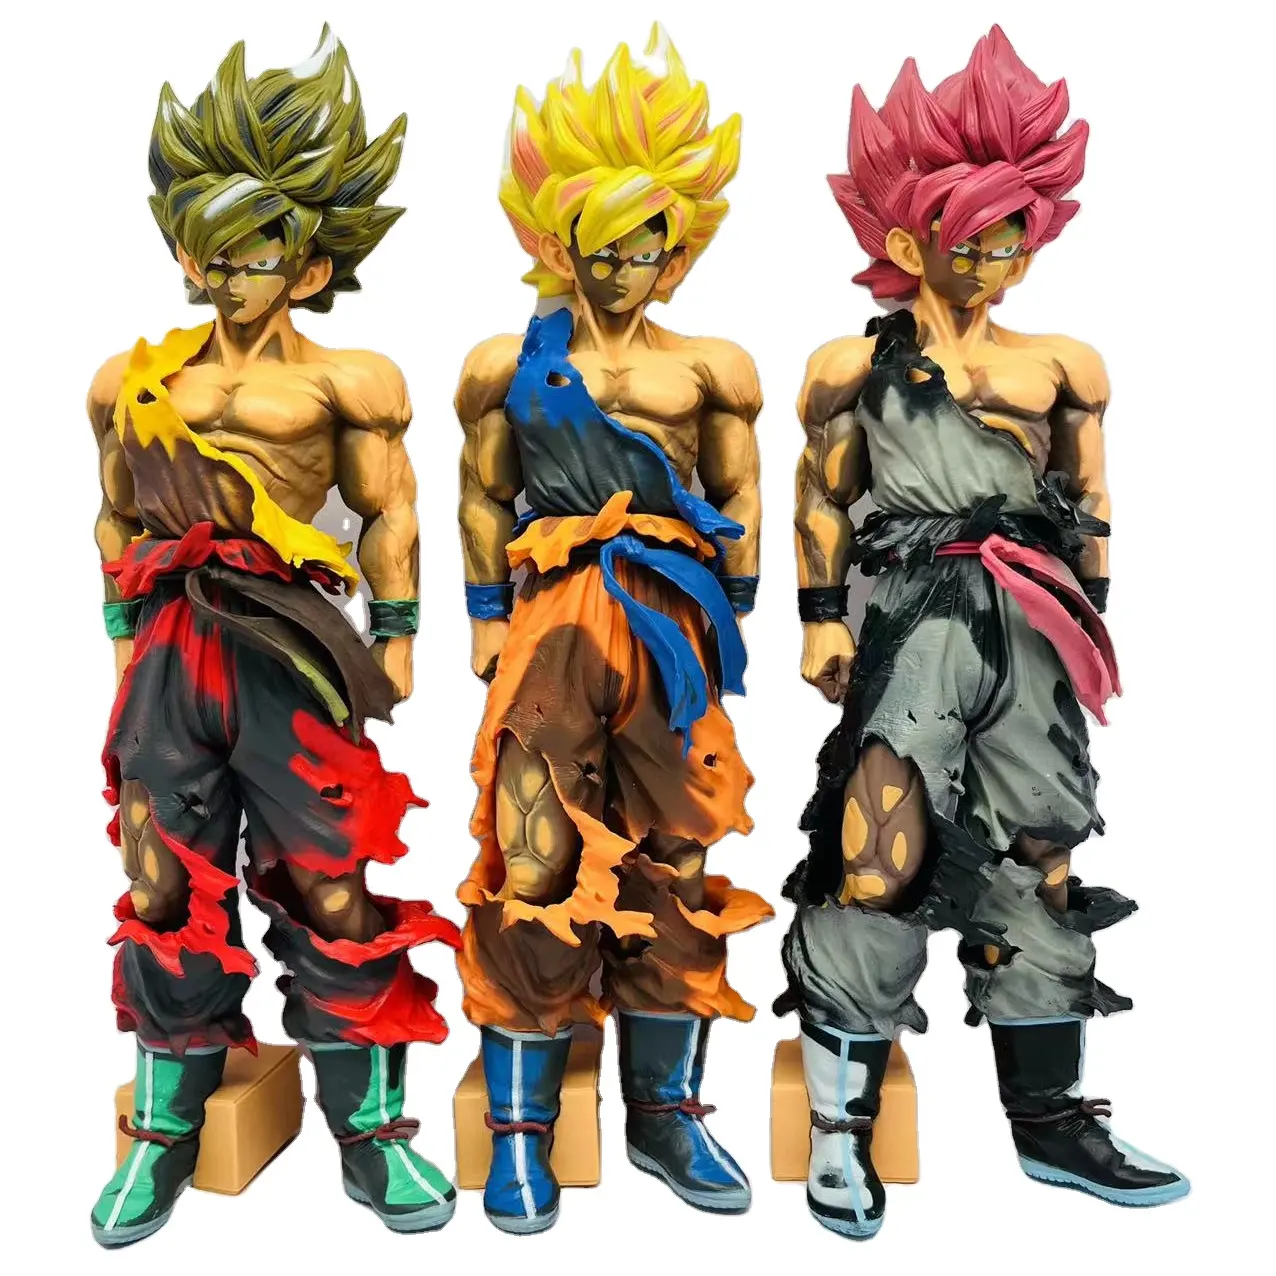 HUAYI Goku Action Figure Dragon Balls Figure serie di film Dragon Balls Z Toys Coleccion